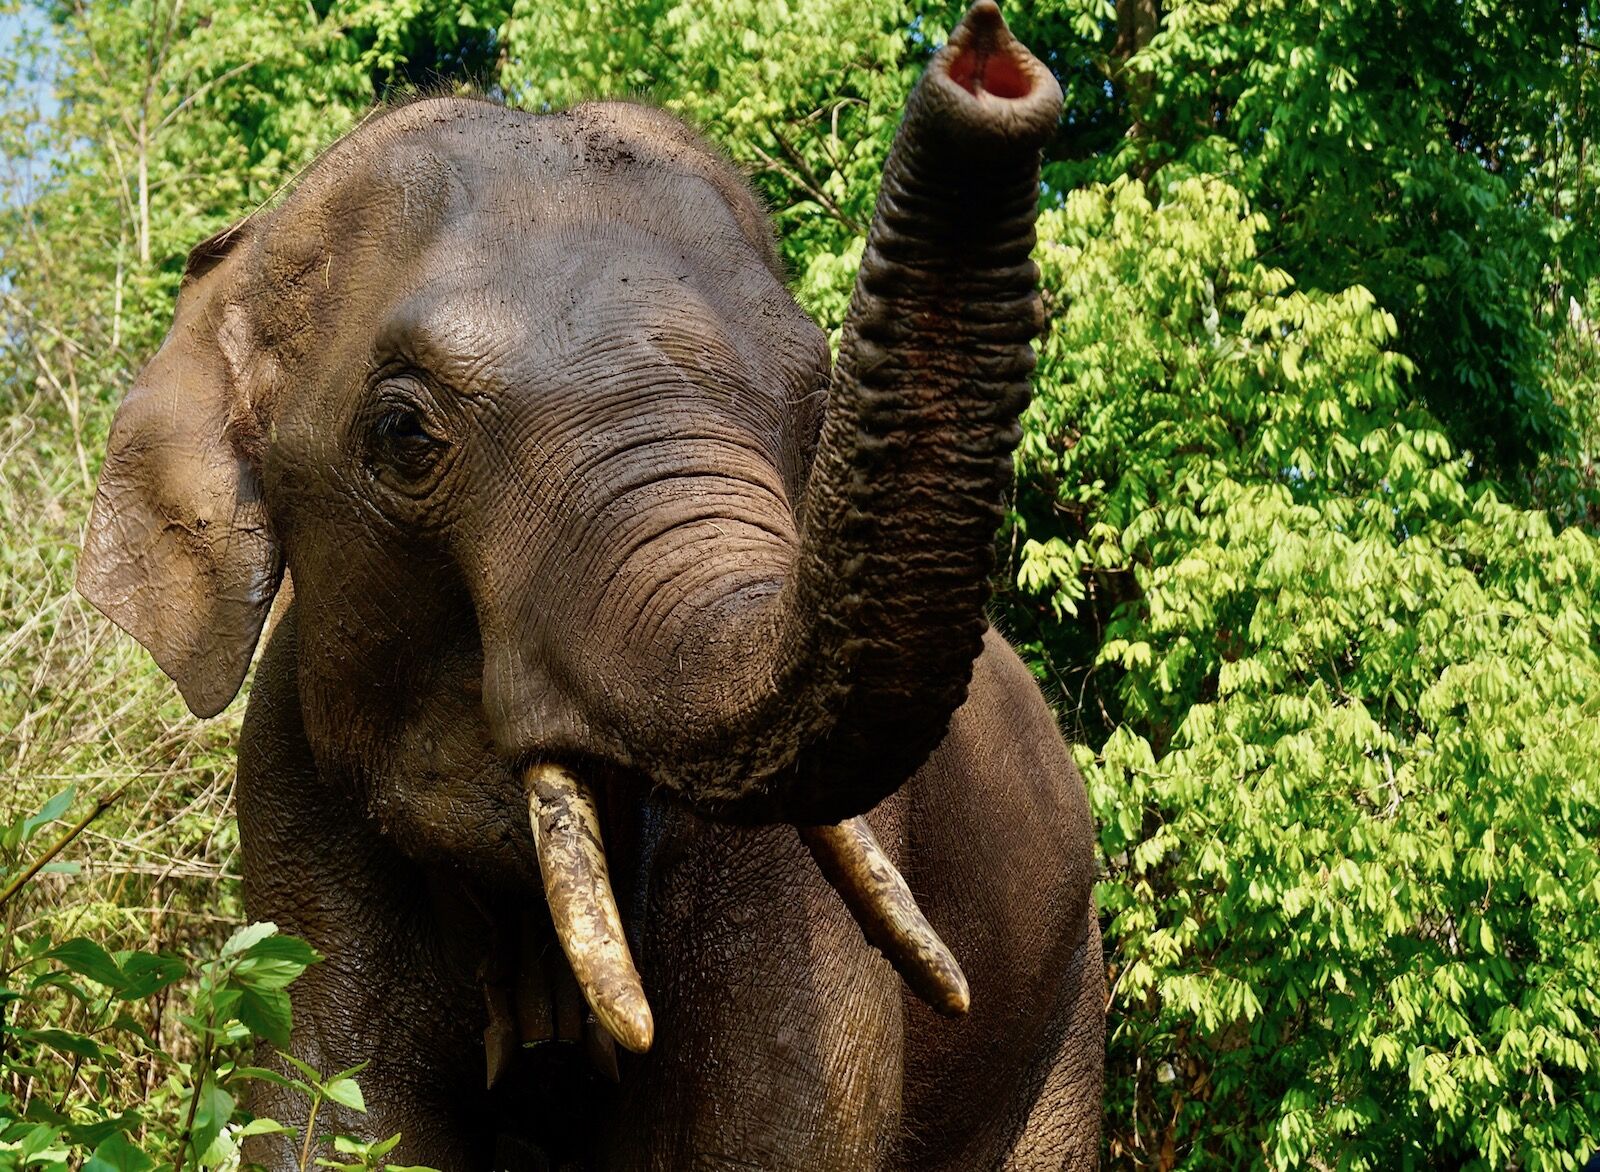 Elephant close up with trunk up - wildlife tourism